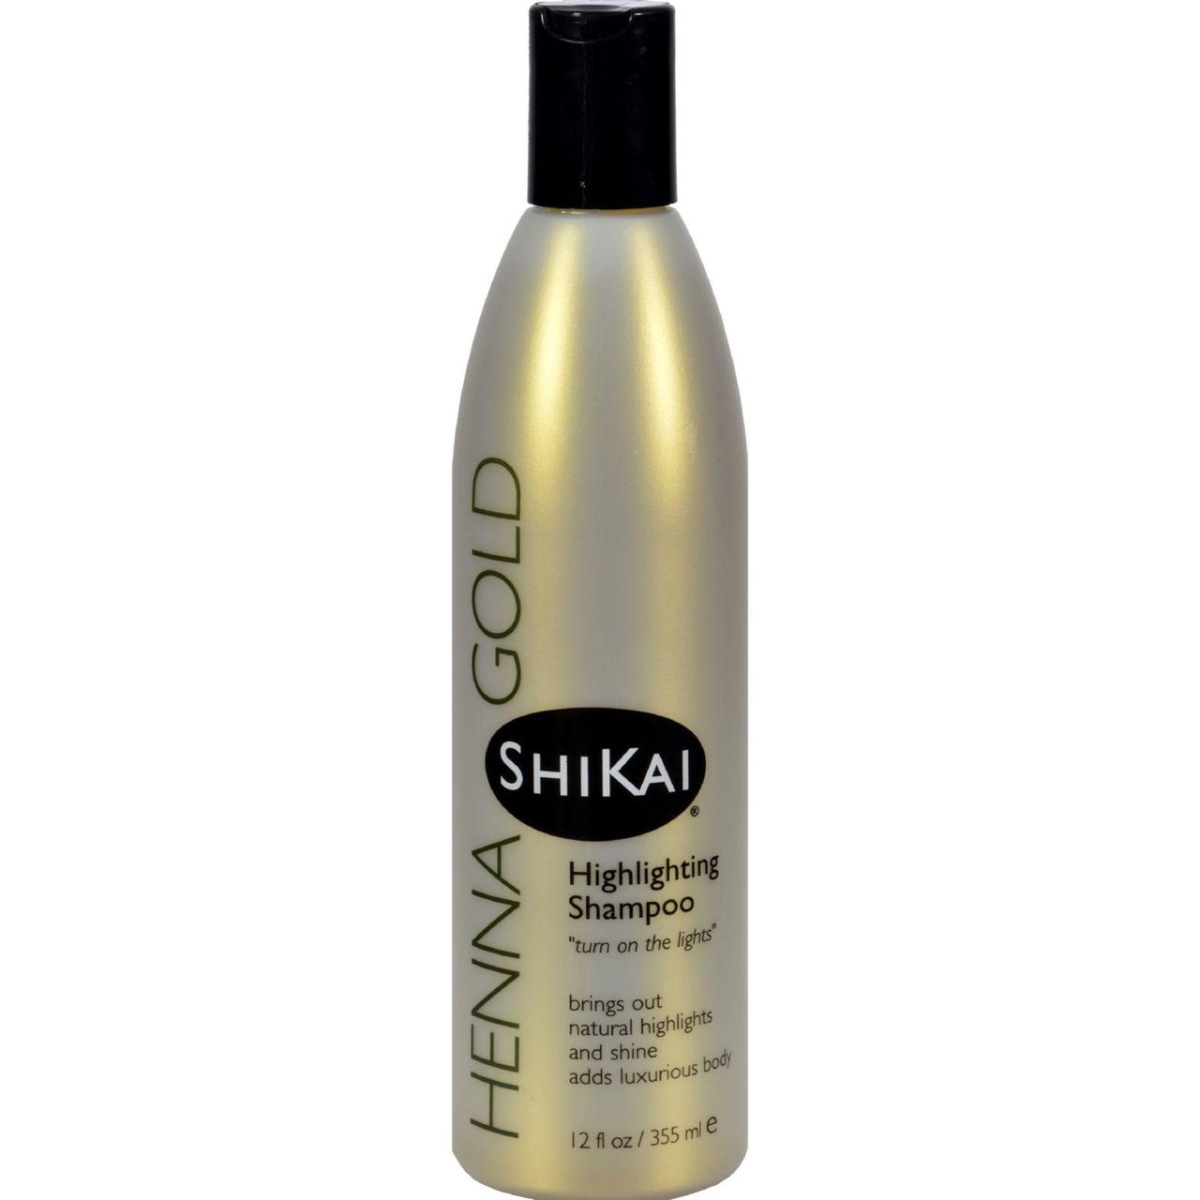 Hg0809400 12 Fl Oz Highlighting Shampoo